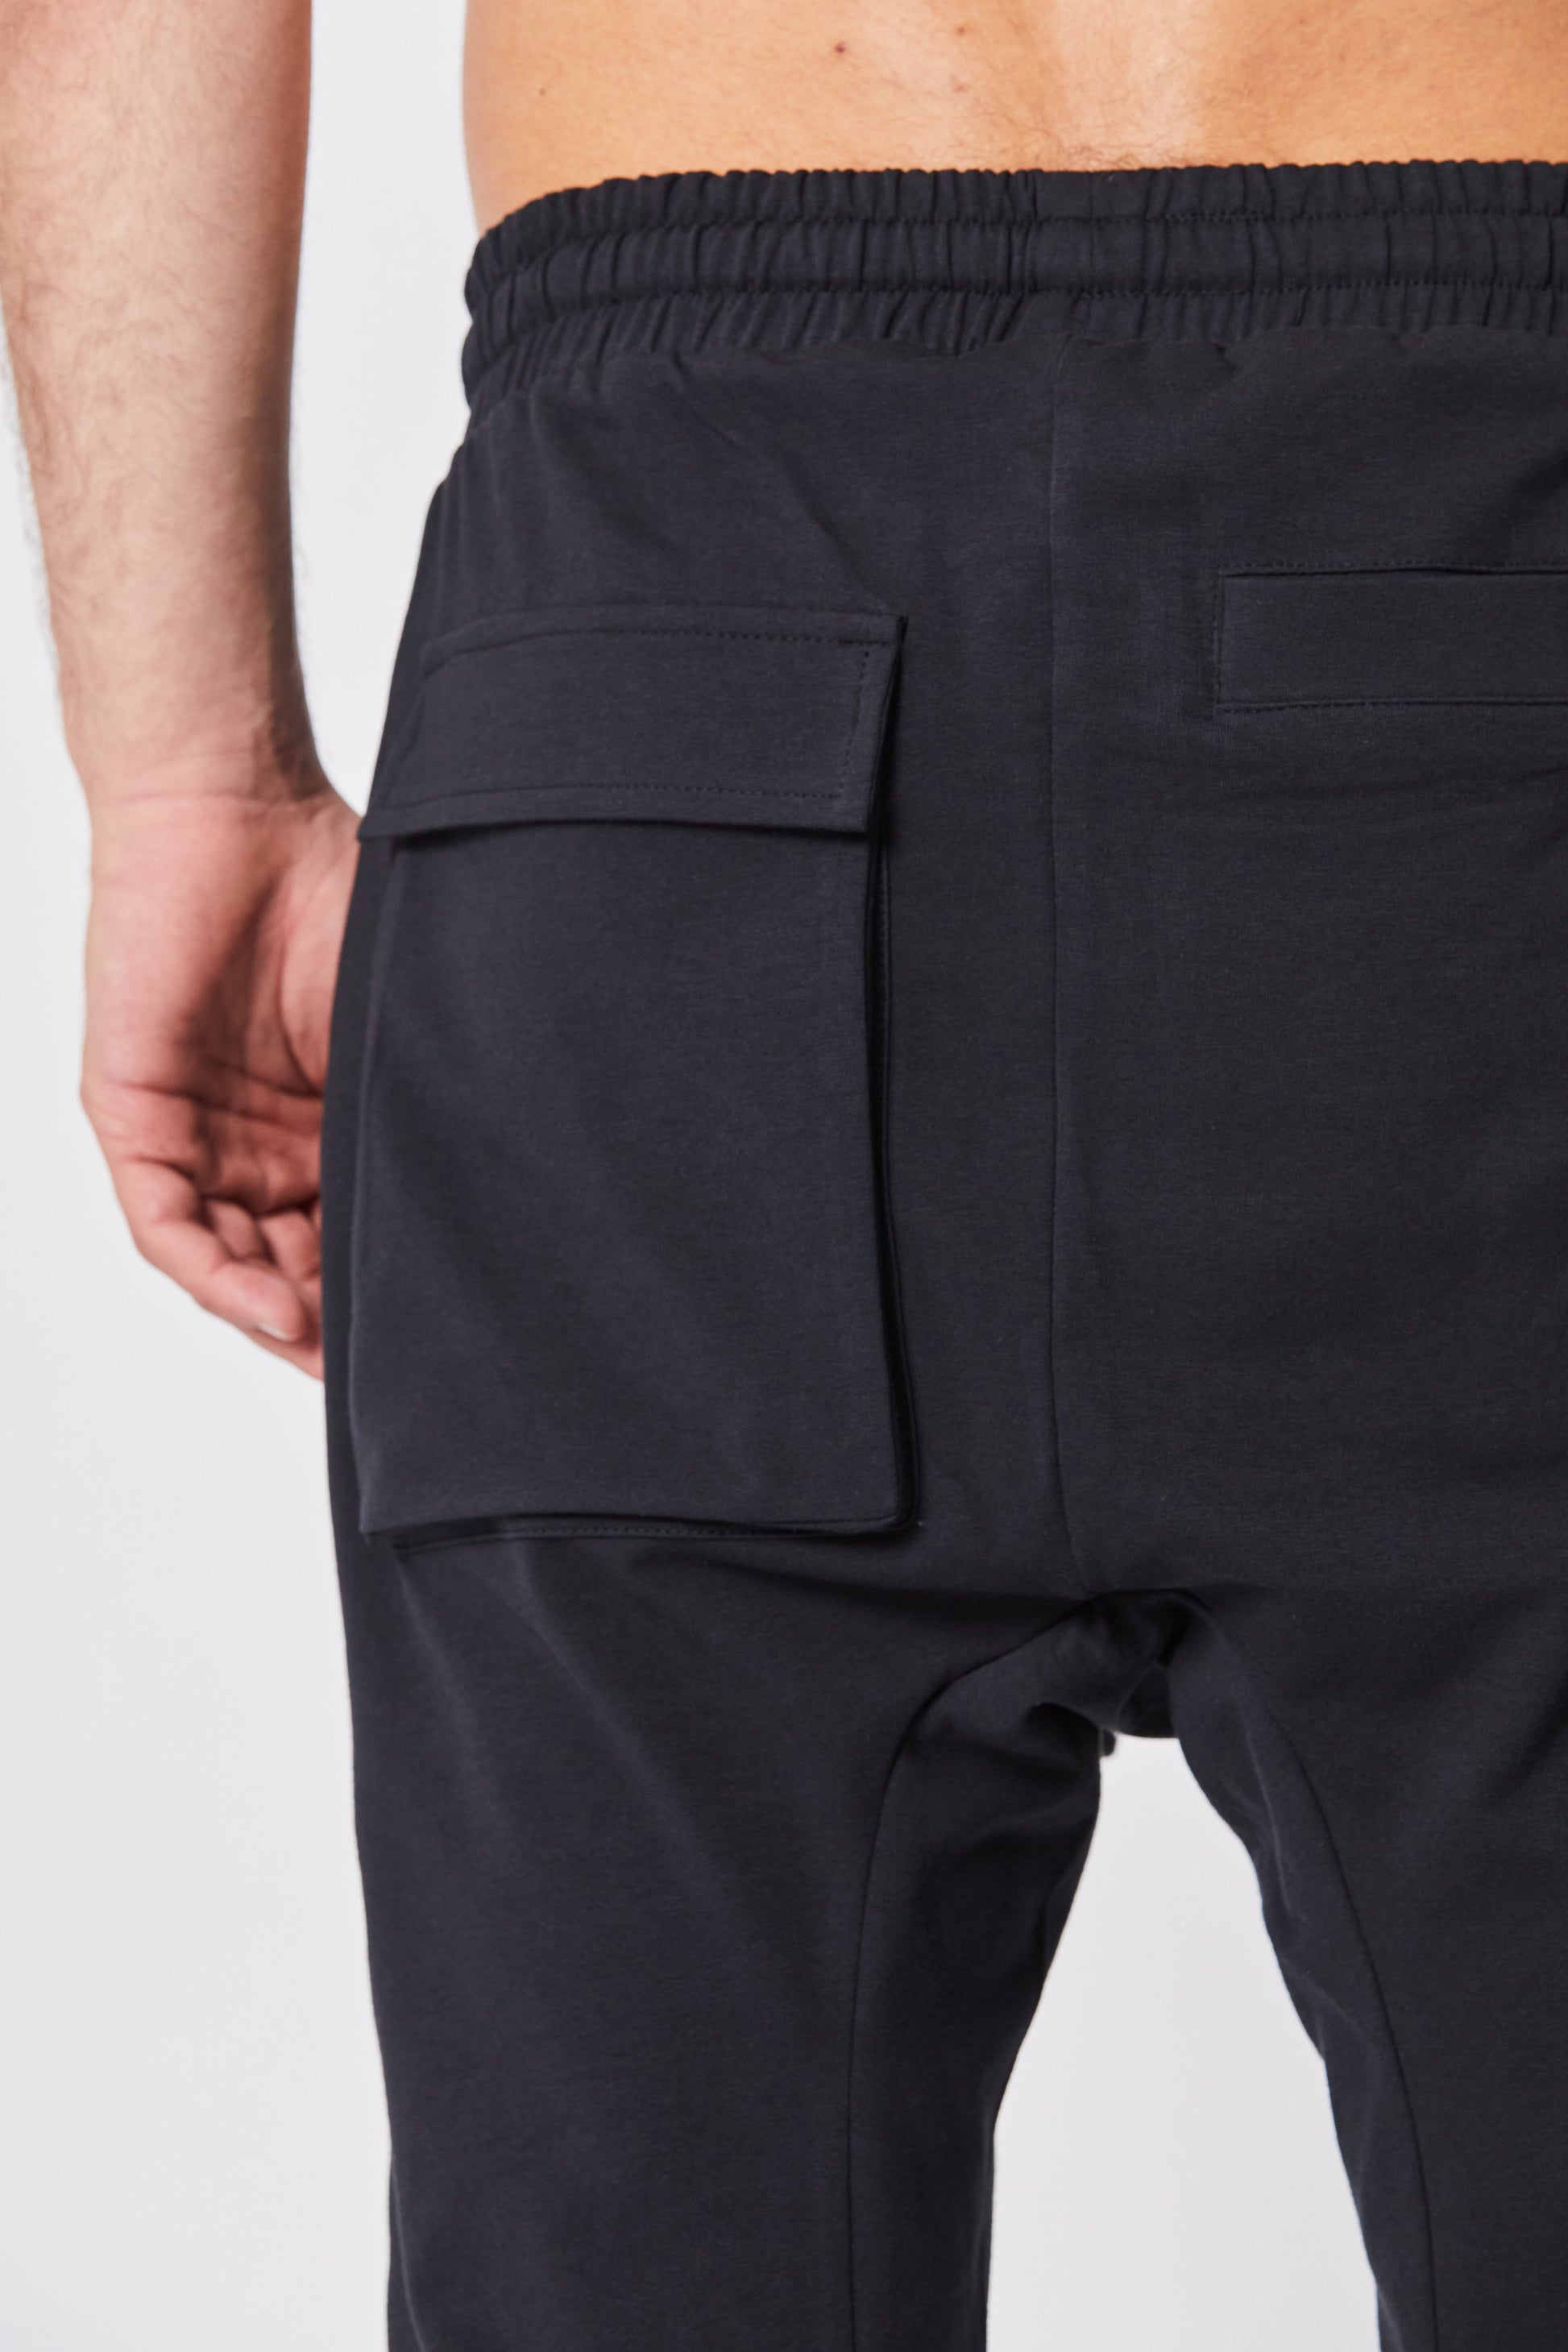 379 – Shorts MST Crotch Drop Modal Archive Black The Stretch Cotton